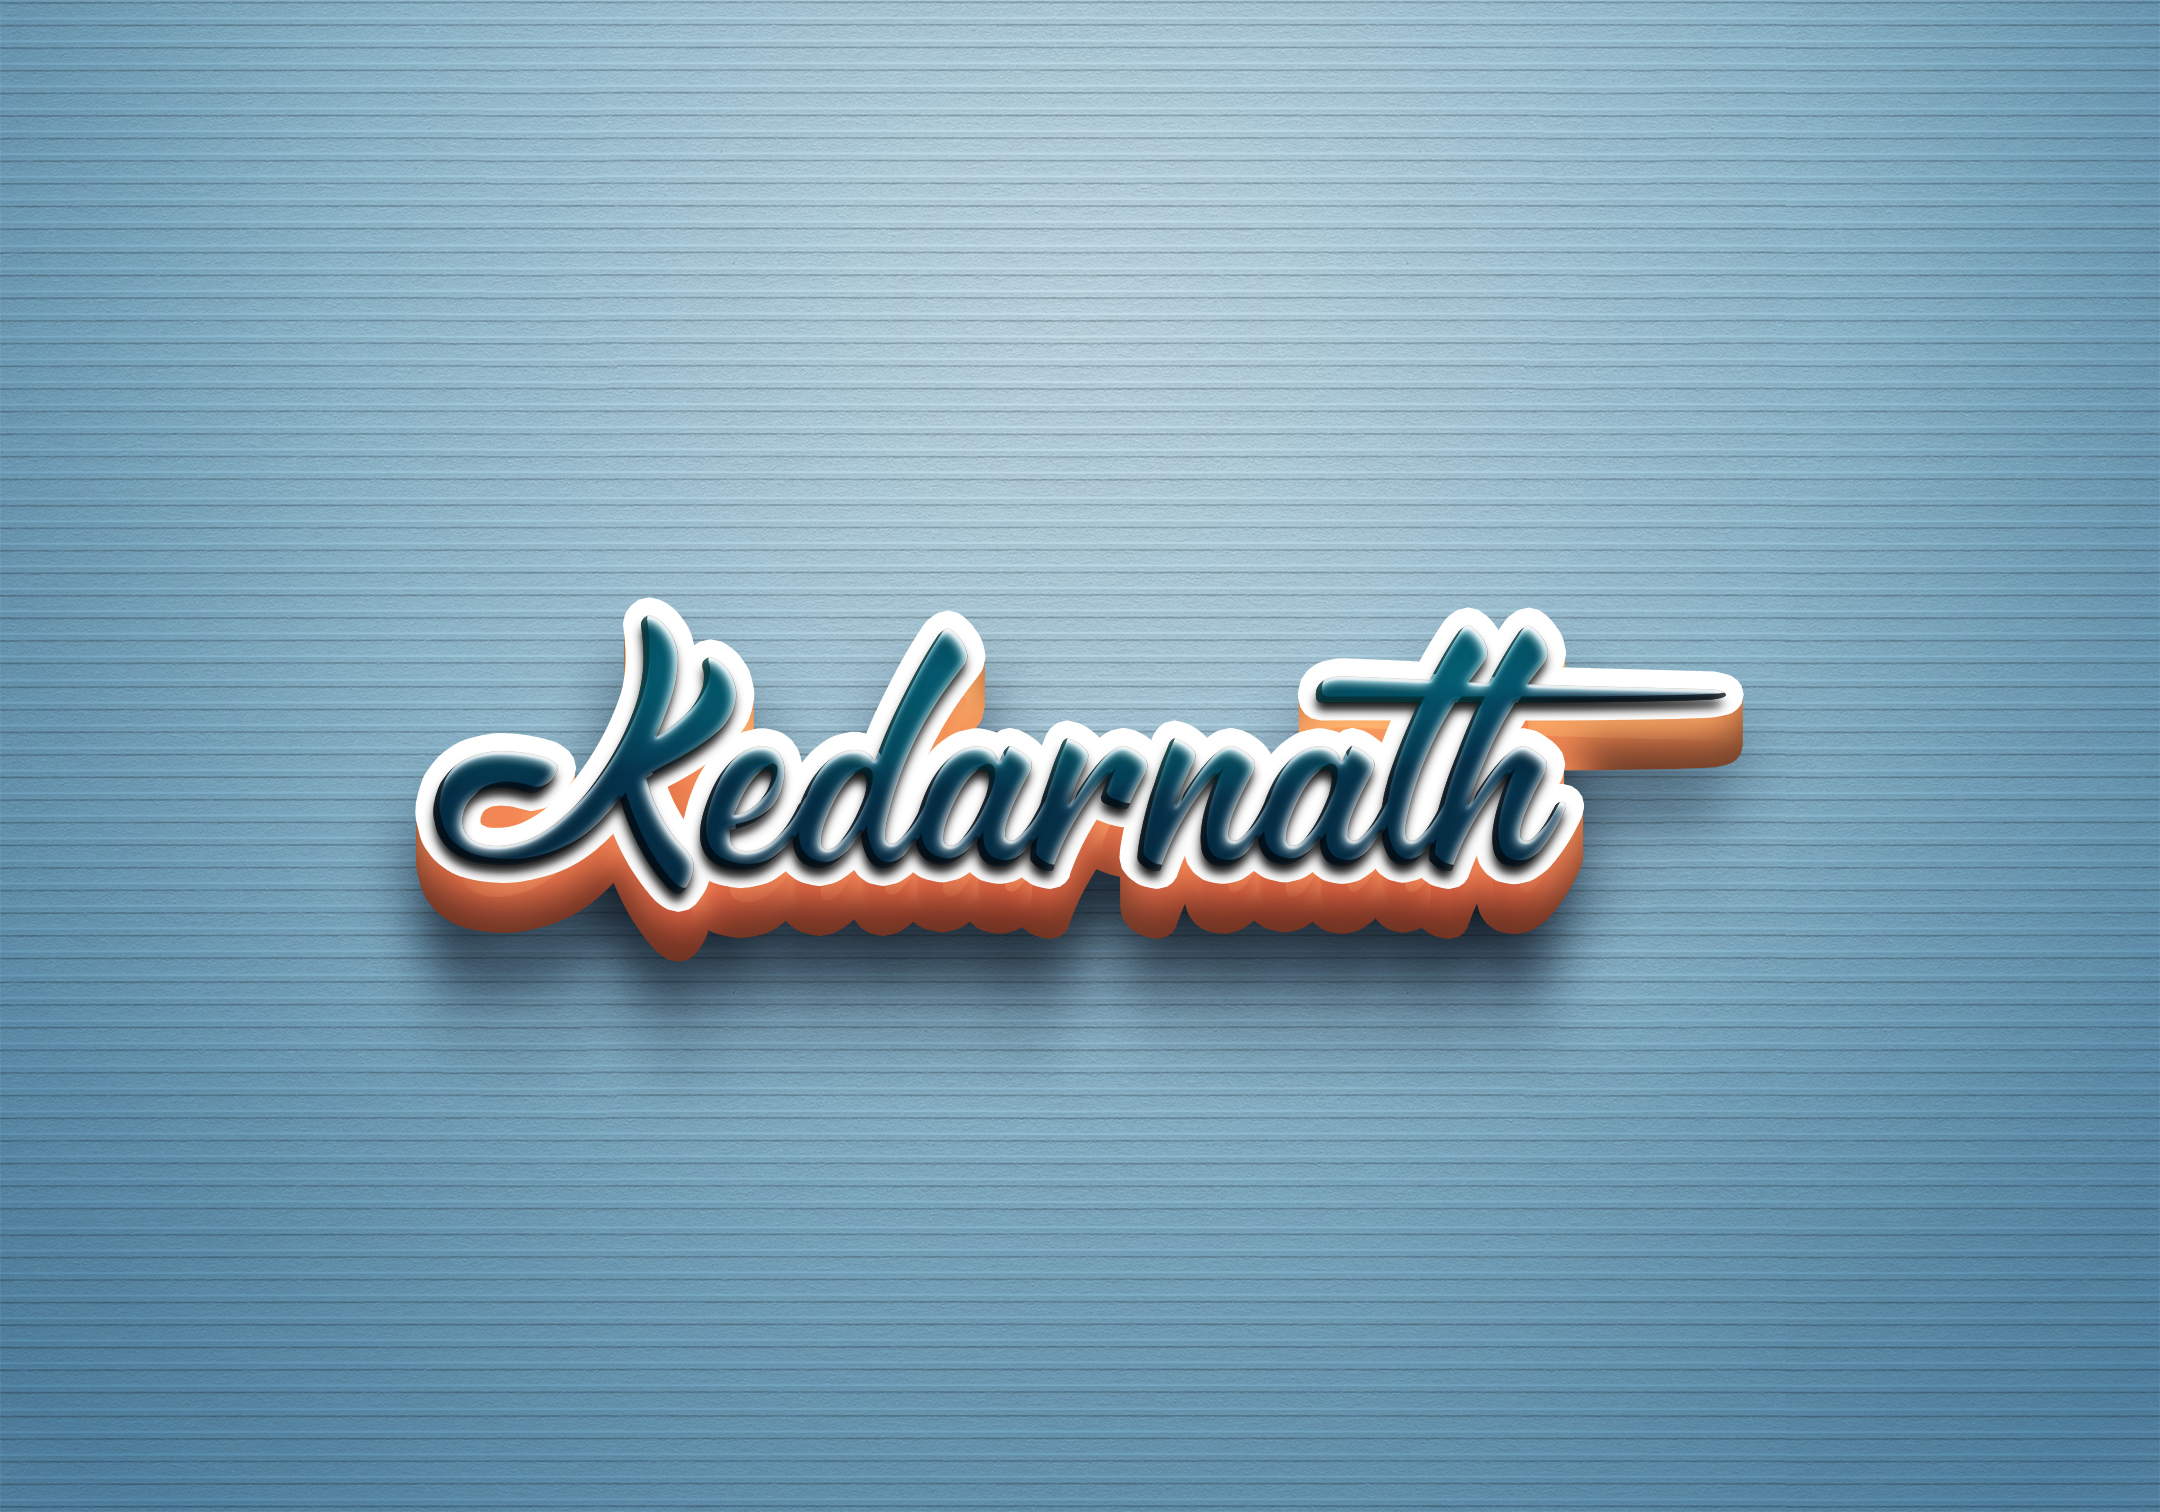 Kedarnath Mountain: Over 24 Royalty-Free Licensable Stock Vectors & Vector  Art | Shutterstock